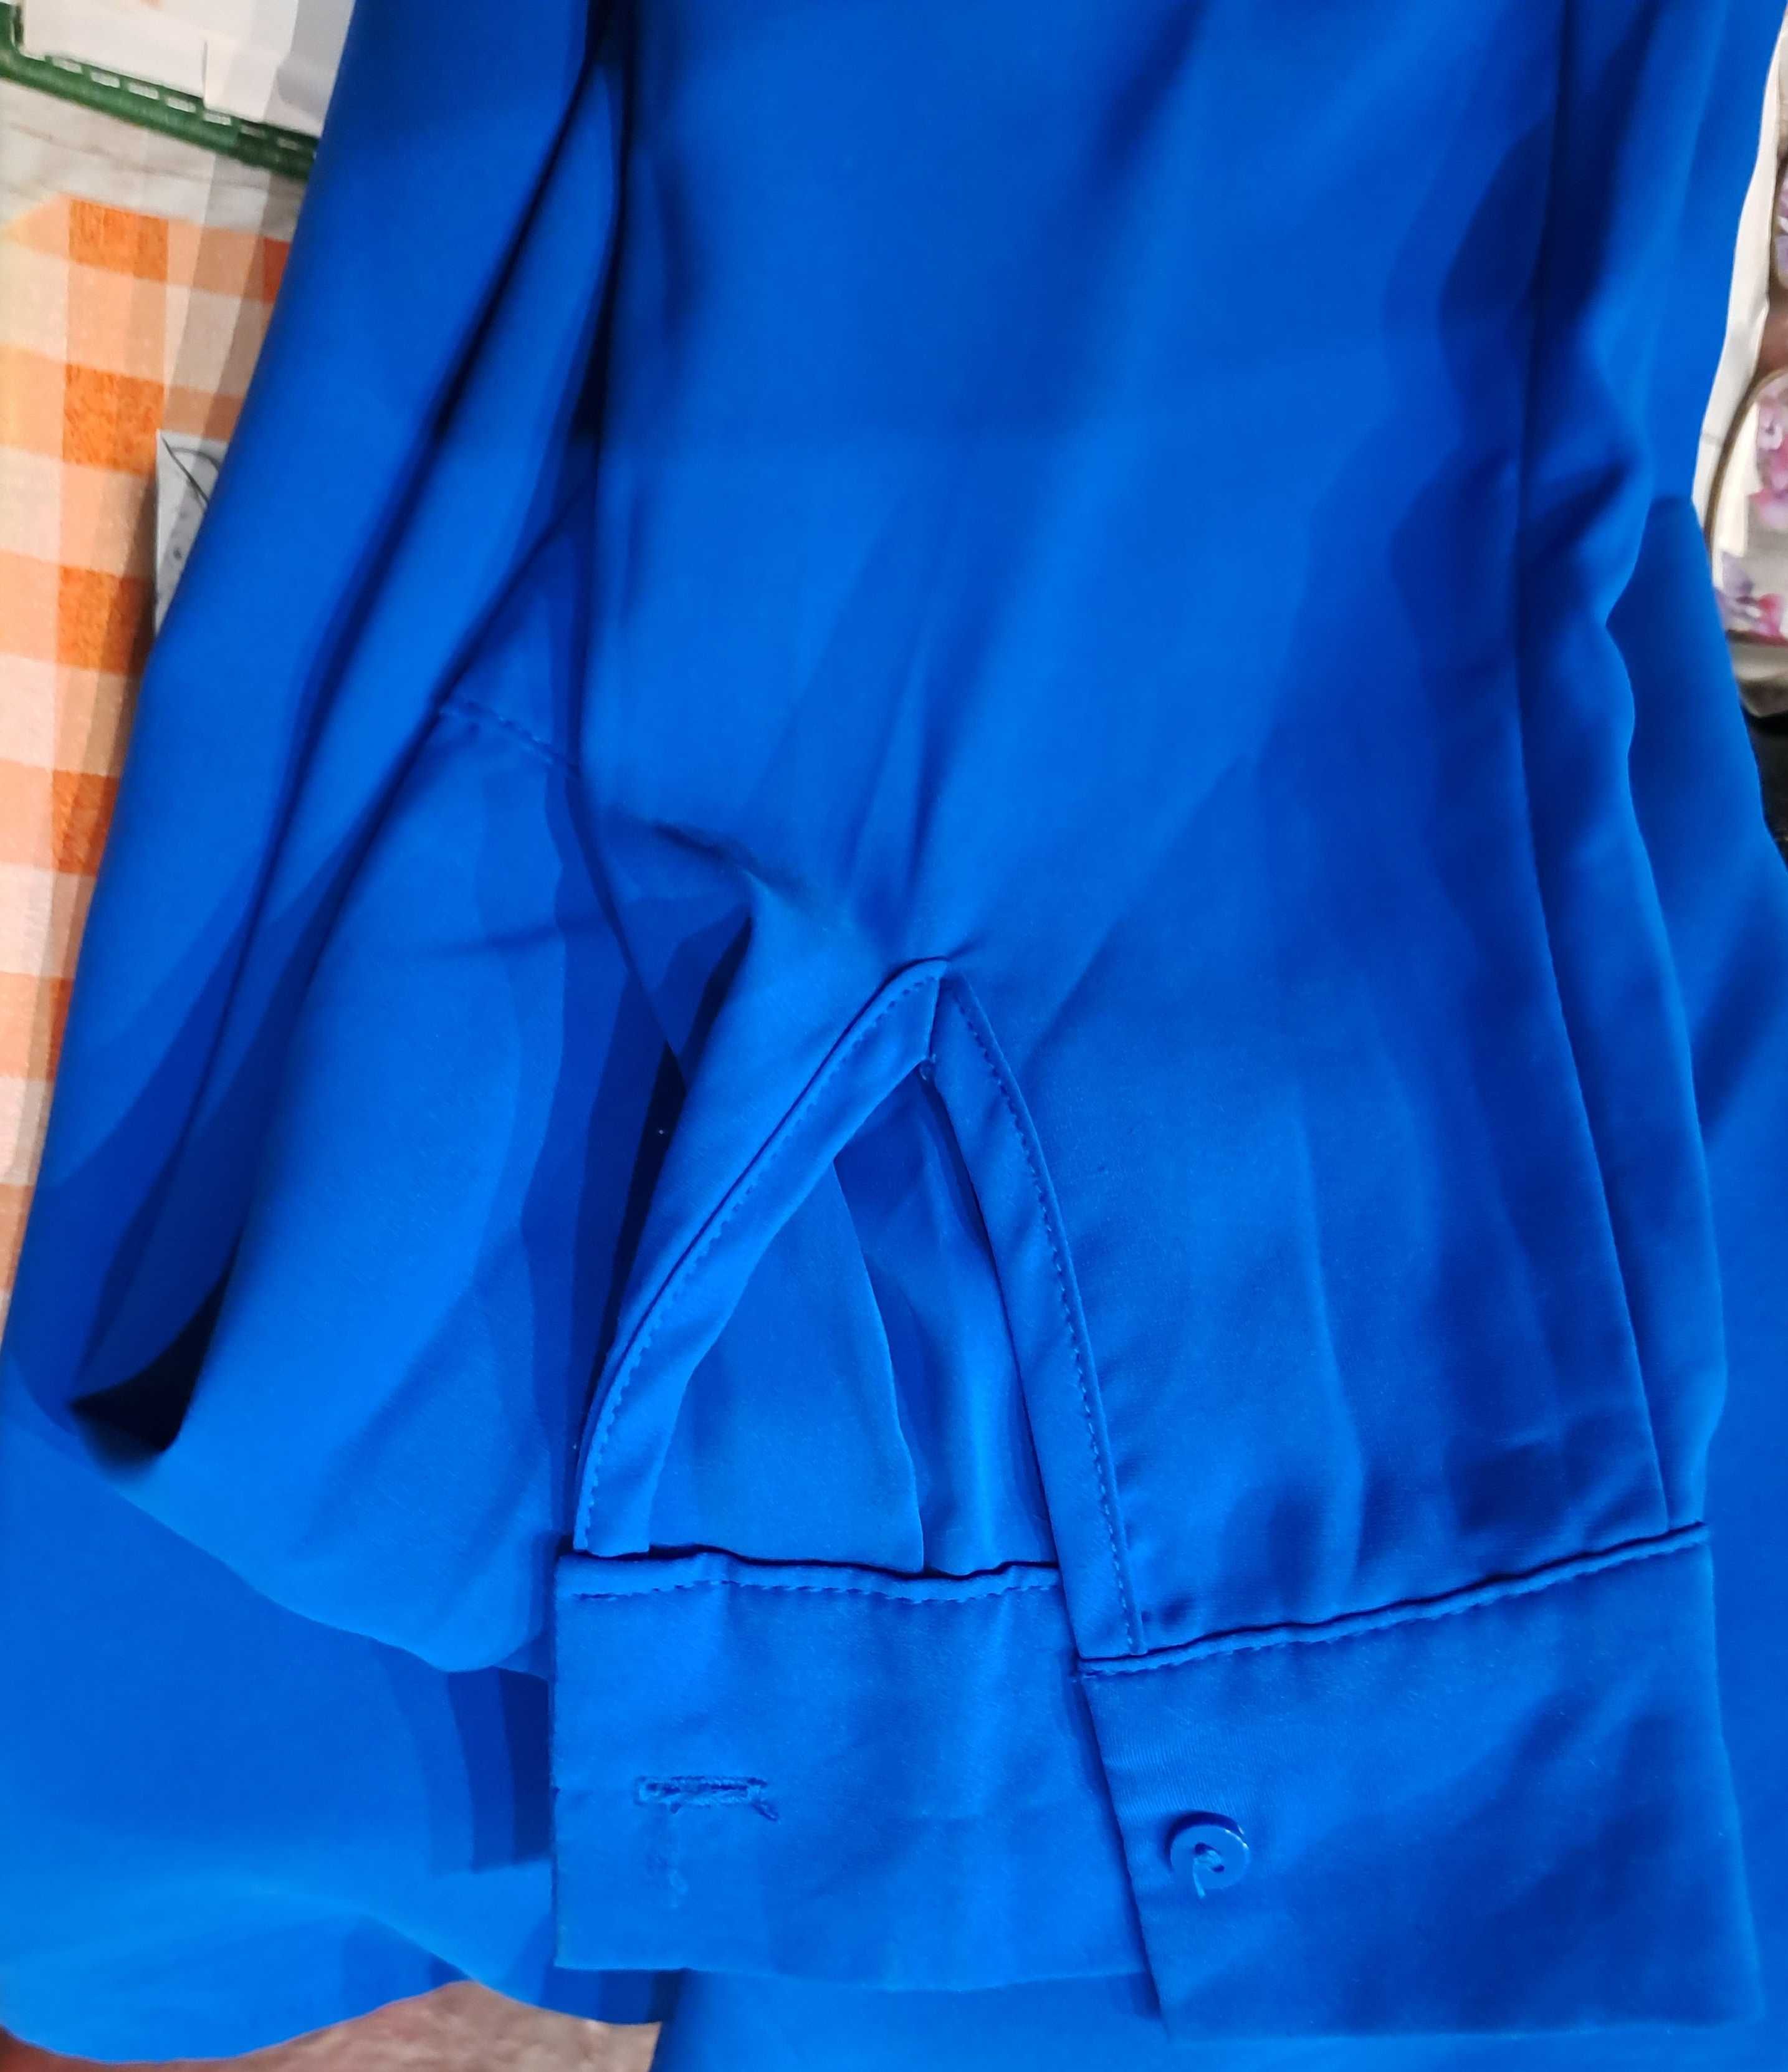 Damska elegancka niebieska bluzka rozmiar S